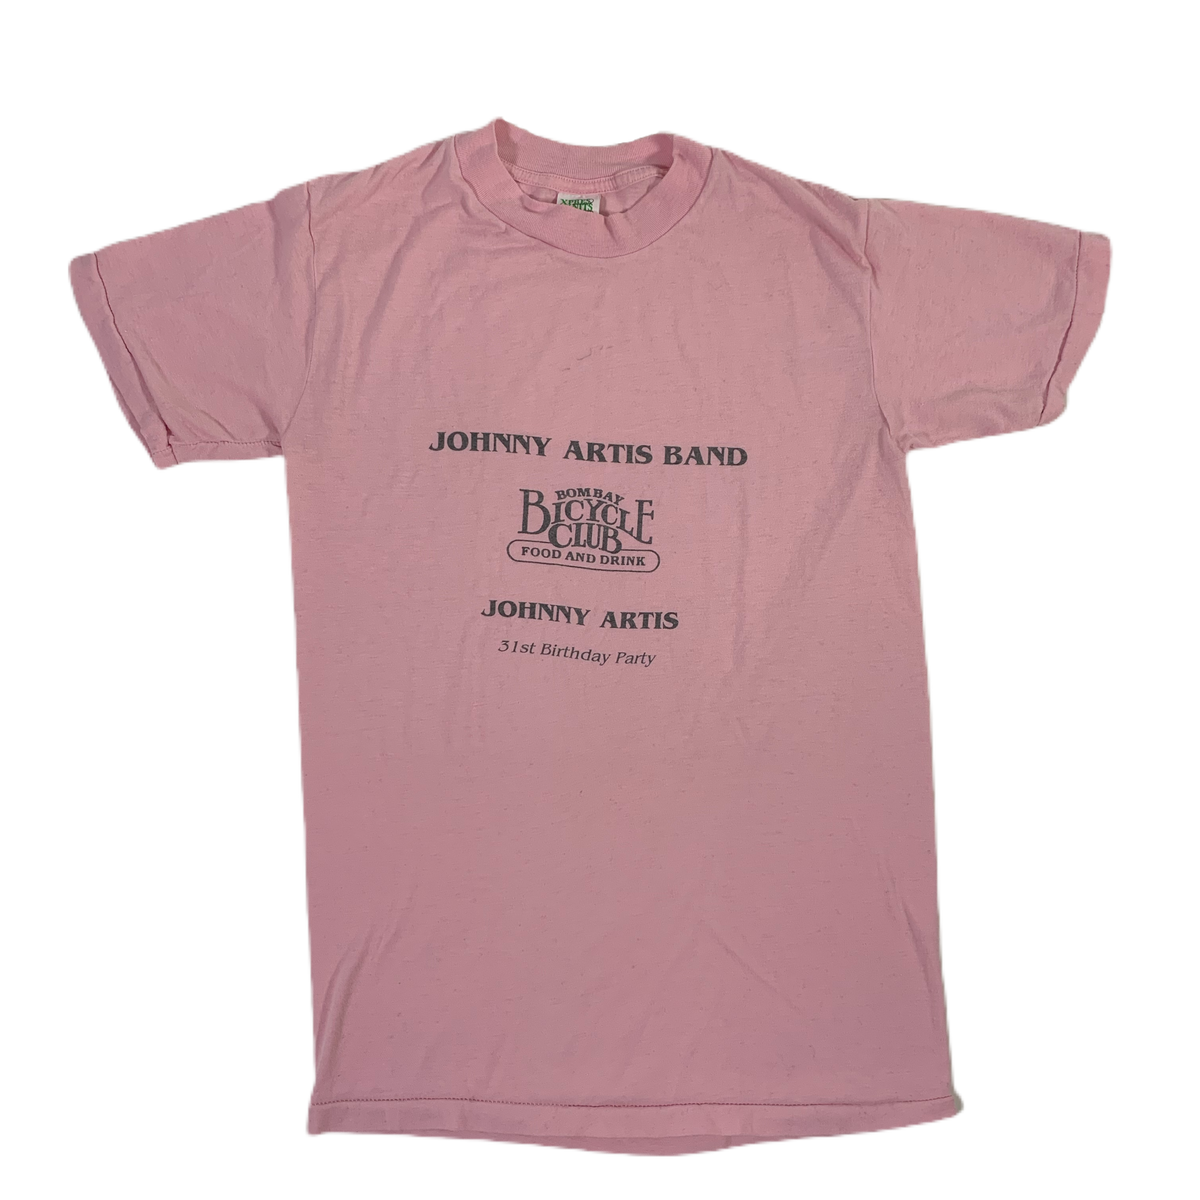 Vintage Johnny Artis Band “Bombay Bicycle Club” T-Shirt - jointcustodydc